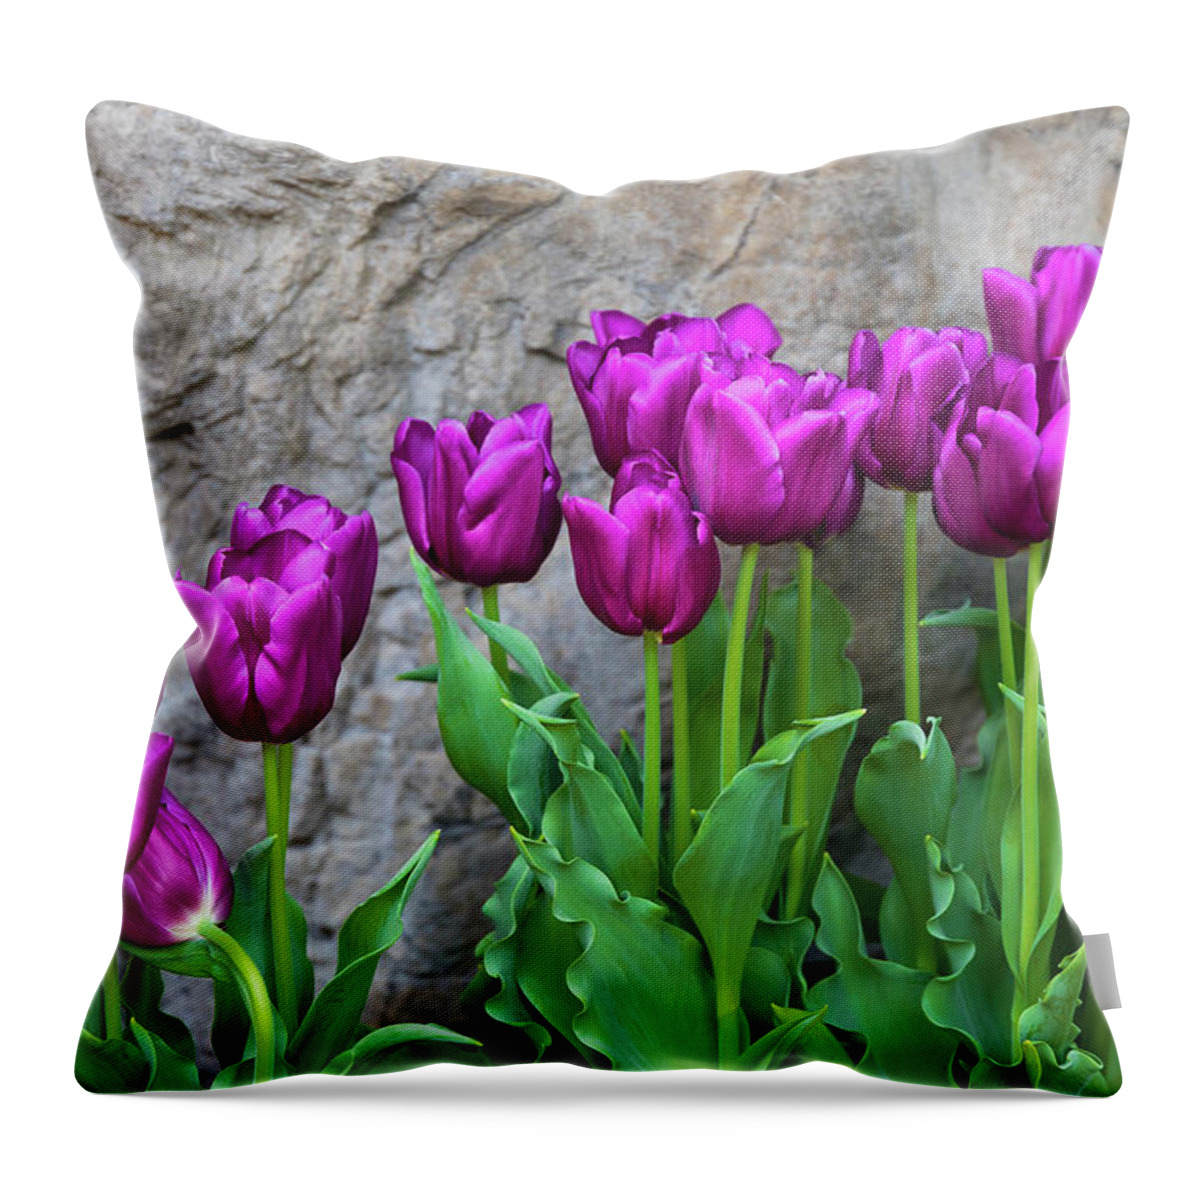 Flower Throw Pillow featuring the photograph Purple Tulips by Tom Mc Nemar